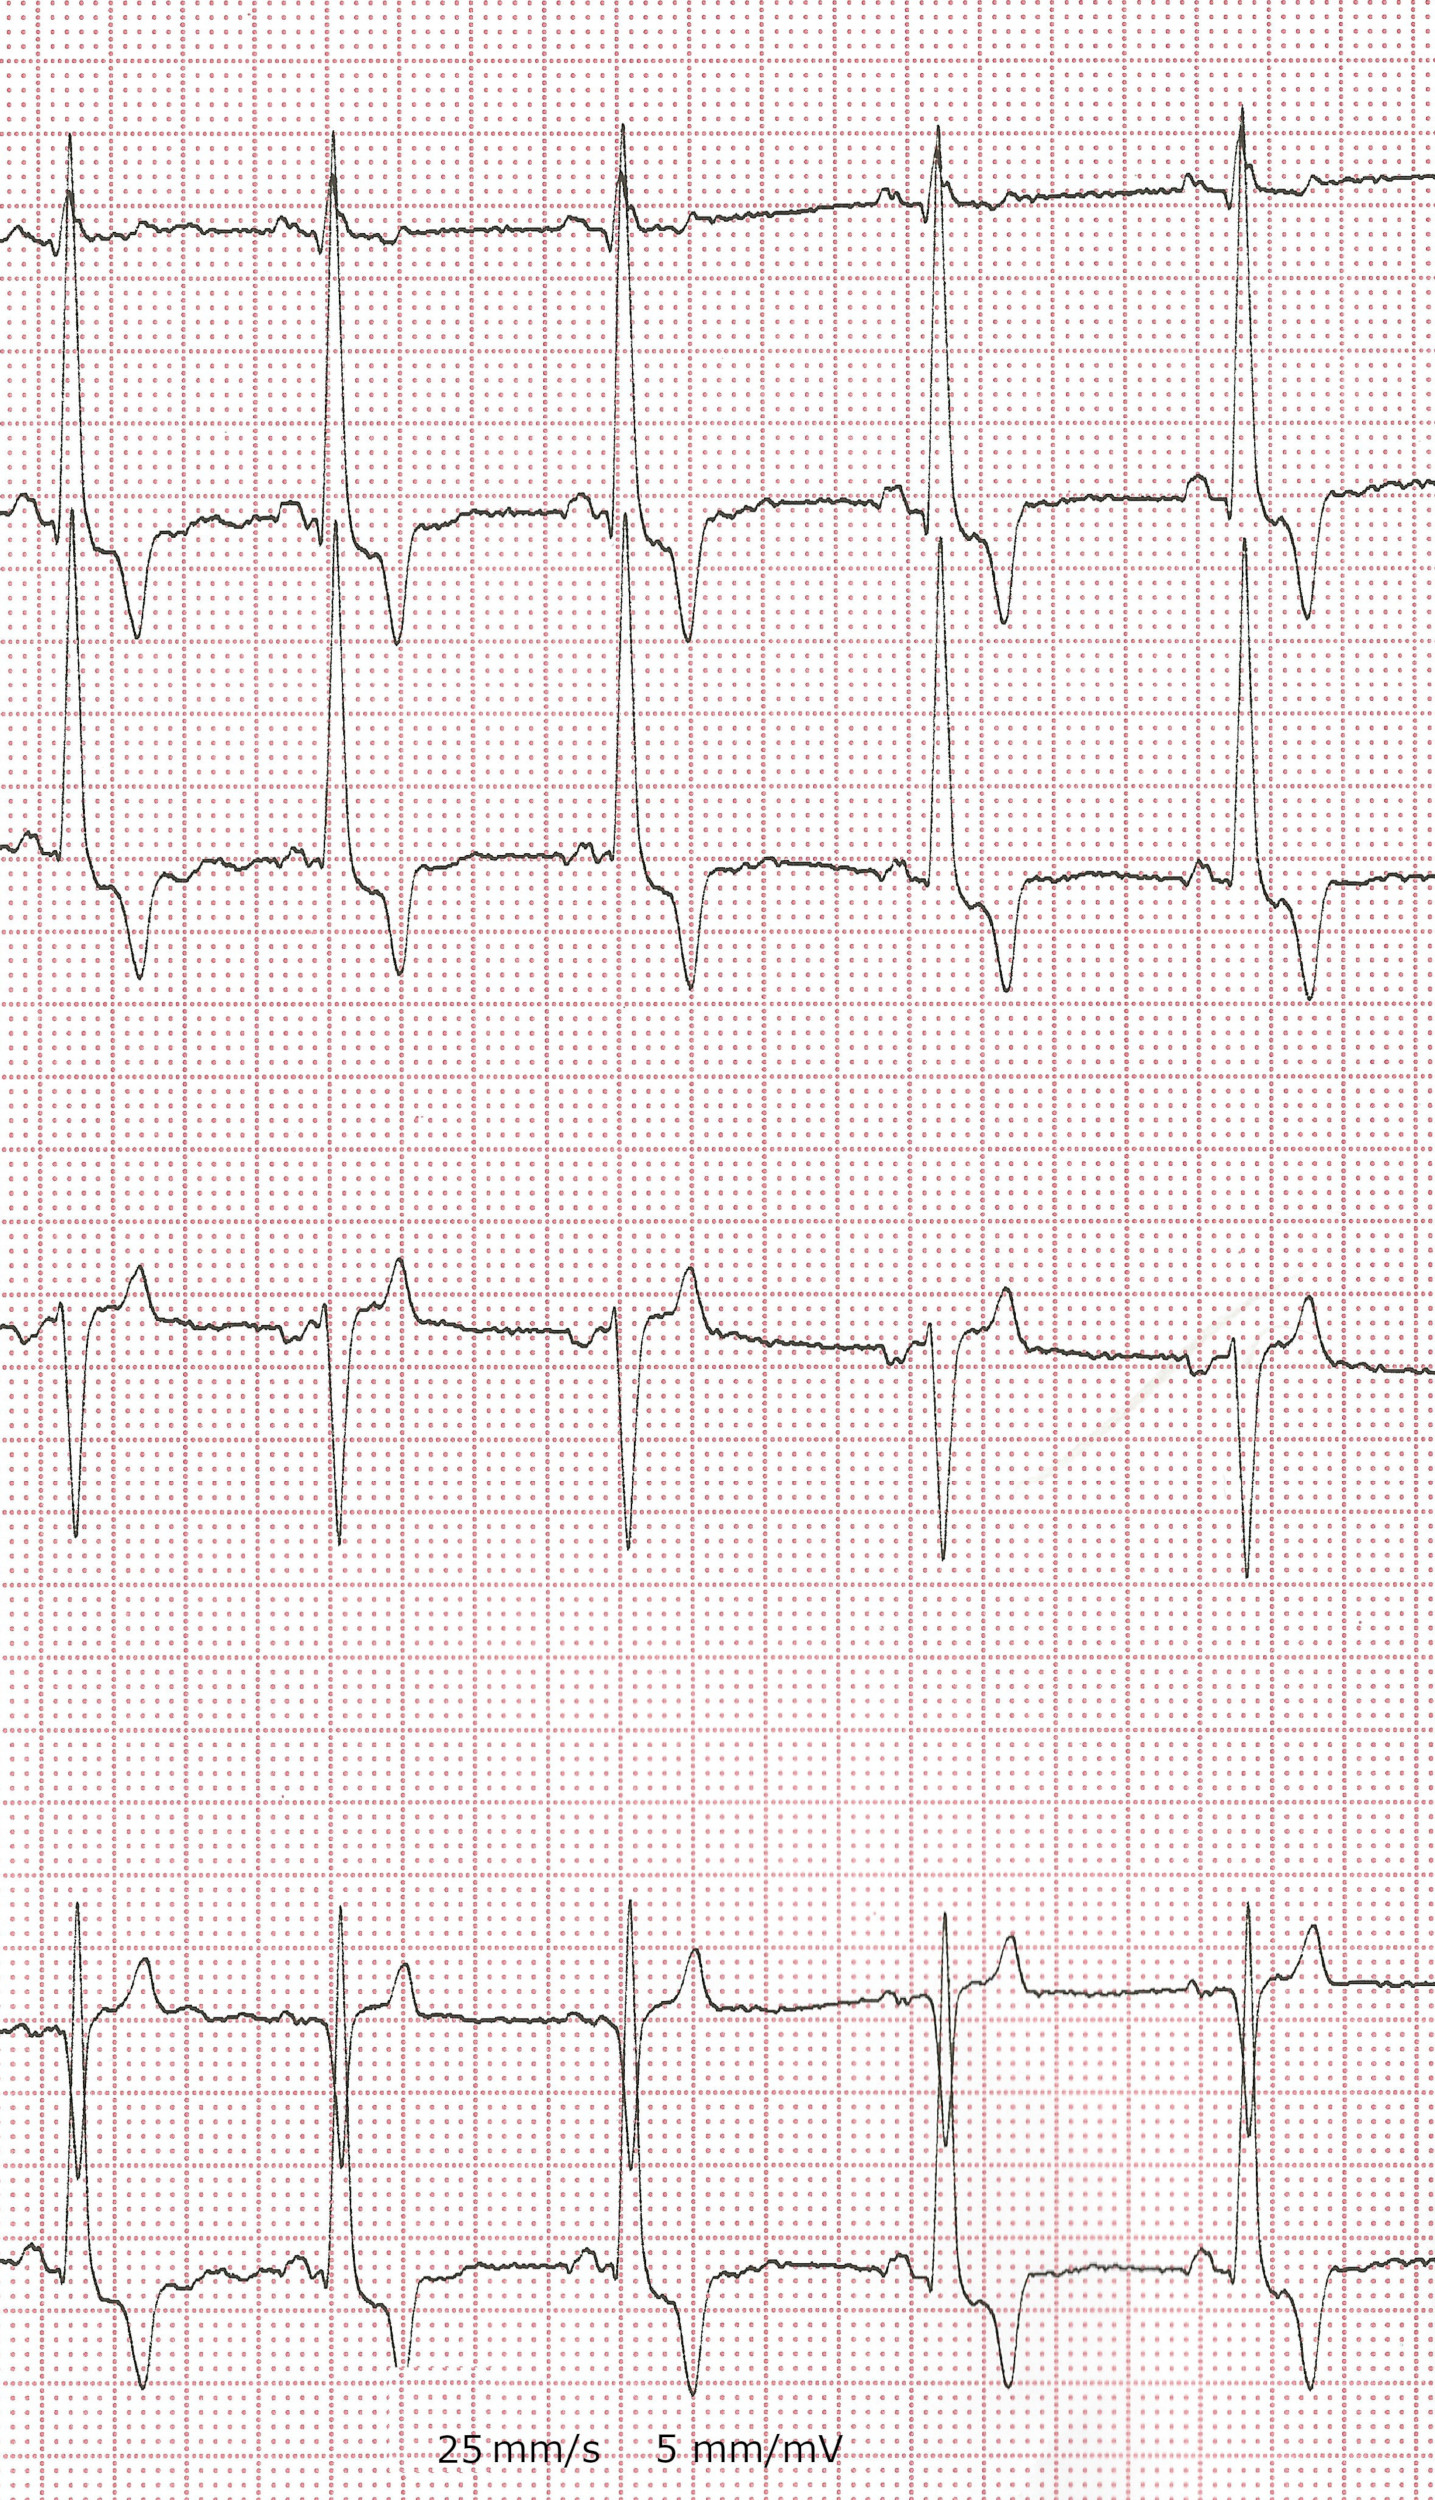 Bradycardie sinusale et dilatation cavitaires dans une cardiomyopathie dilatée.